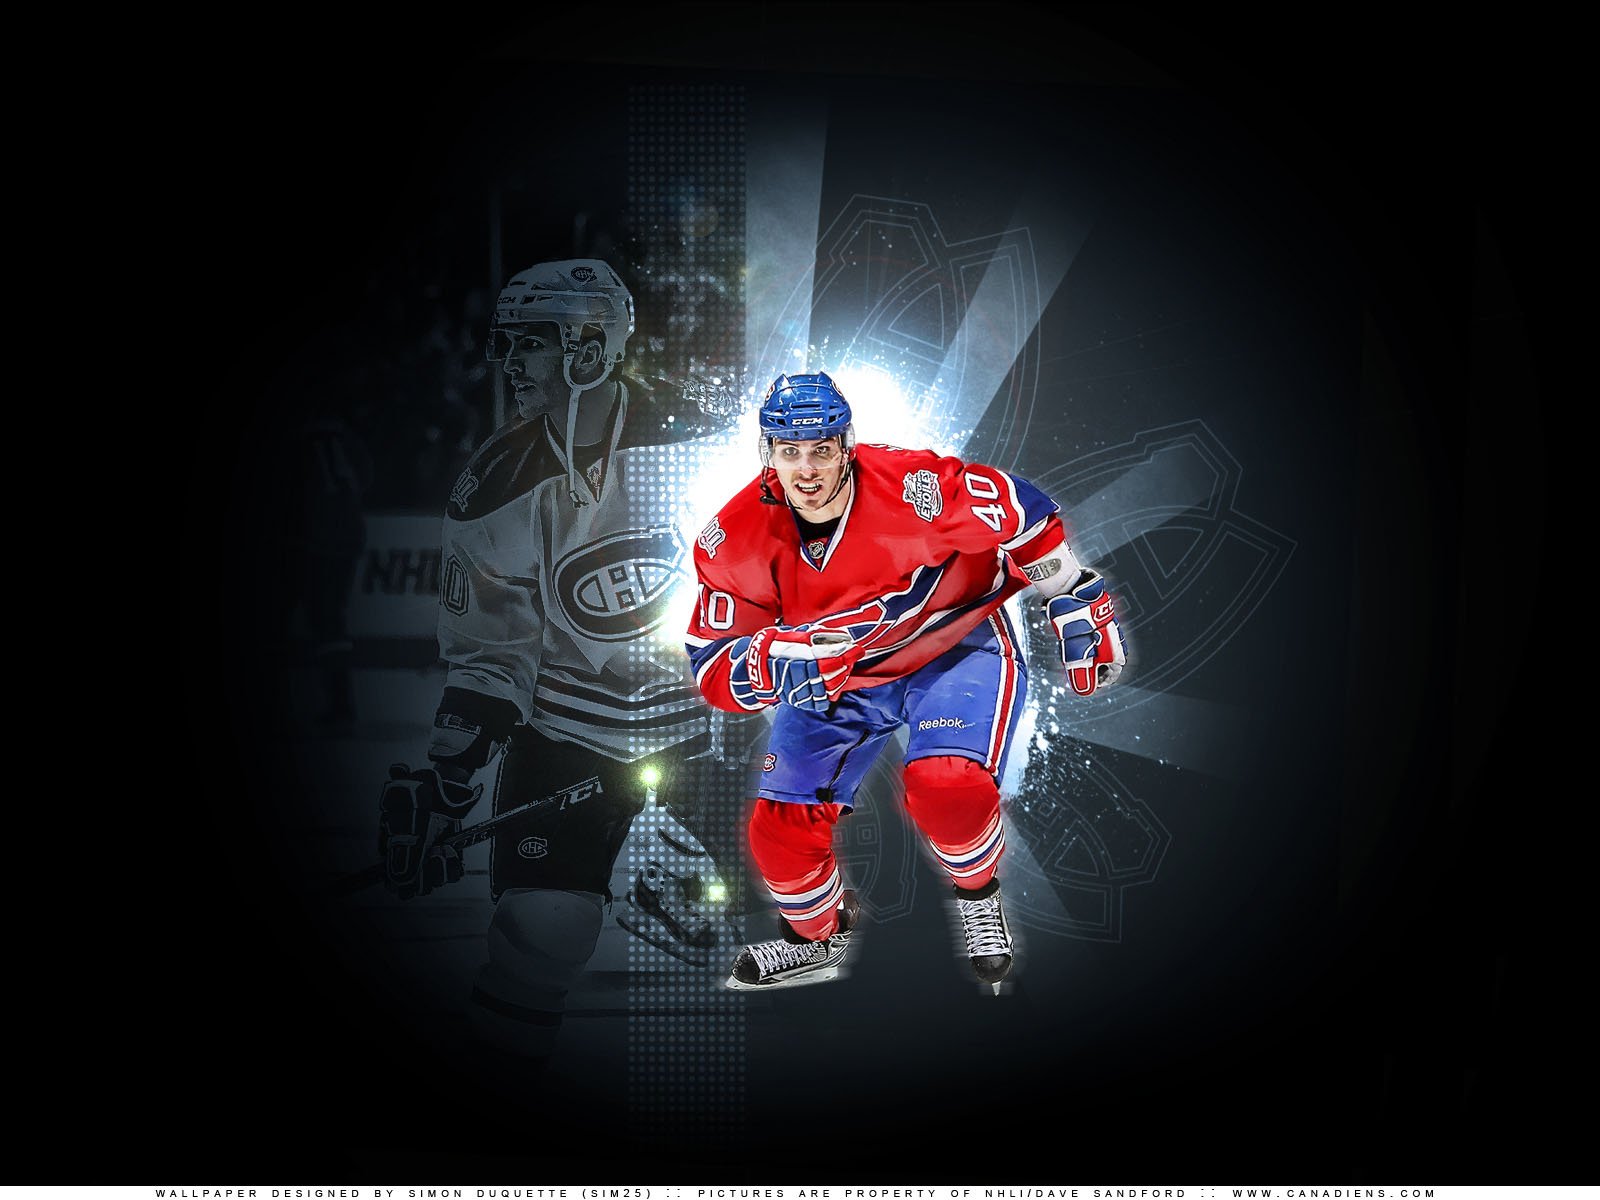 MONTREAL CANADIENS nhl hockey 41 wallpaper 1600x1200 345055 1600x1200